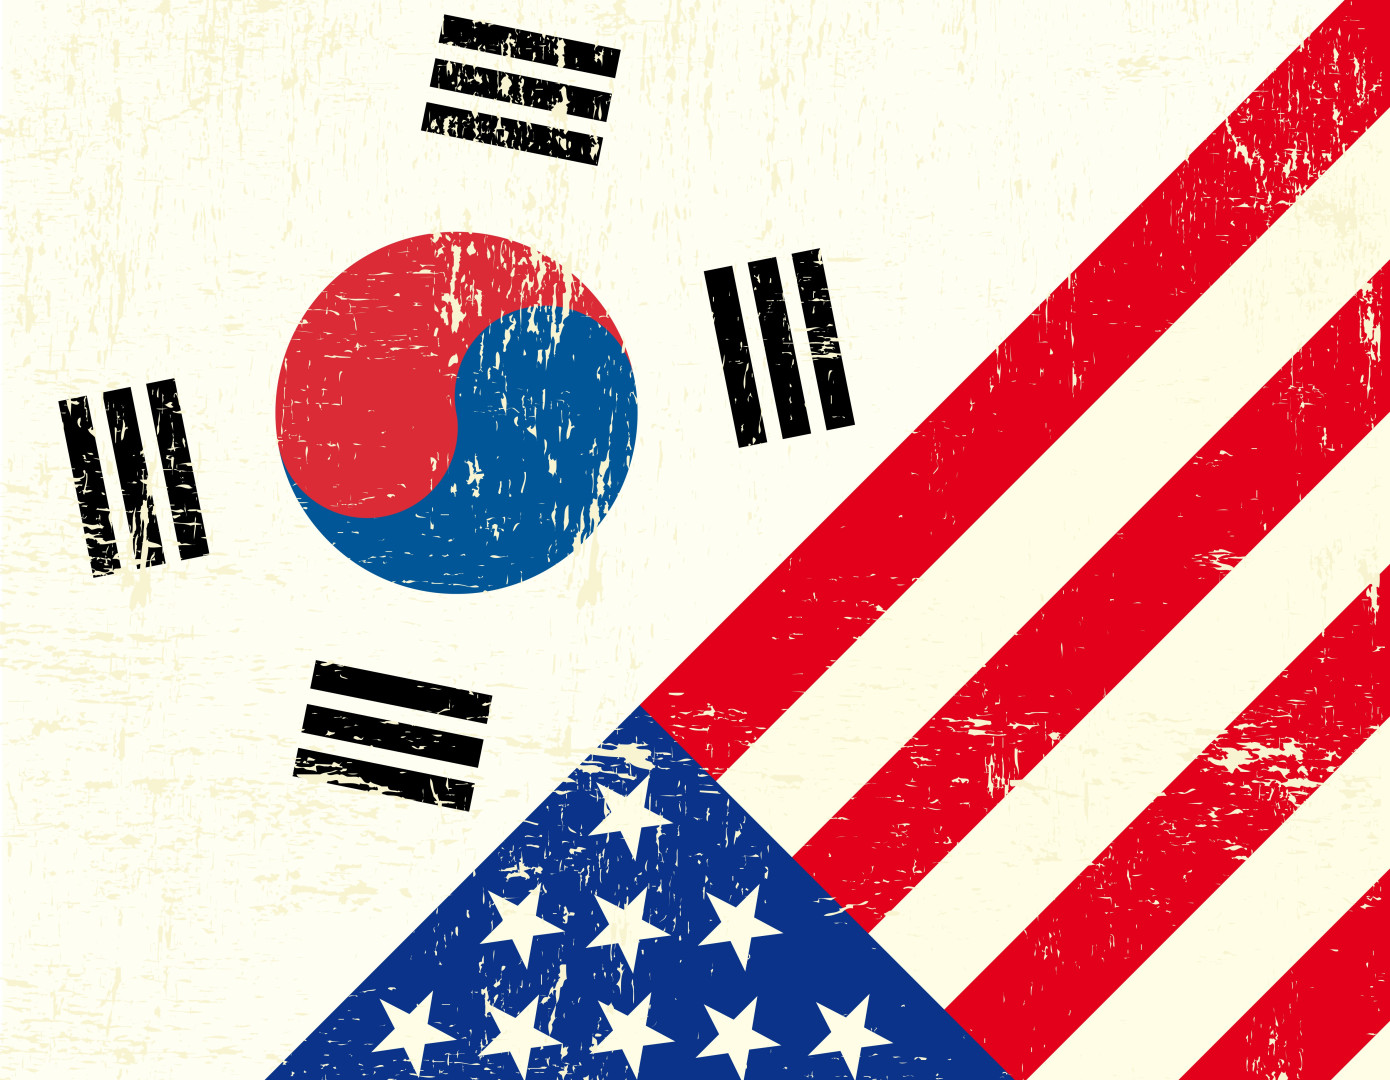 https://techcrunch.com/2015/08/20/optimizing-south-korean-technology-for-american-users/